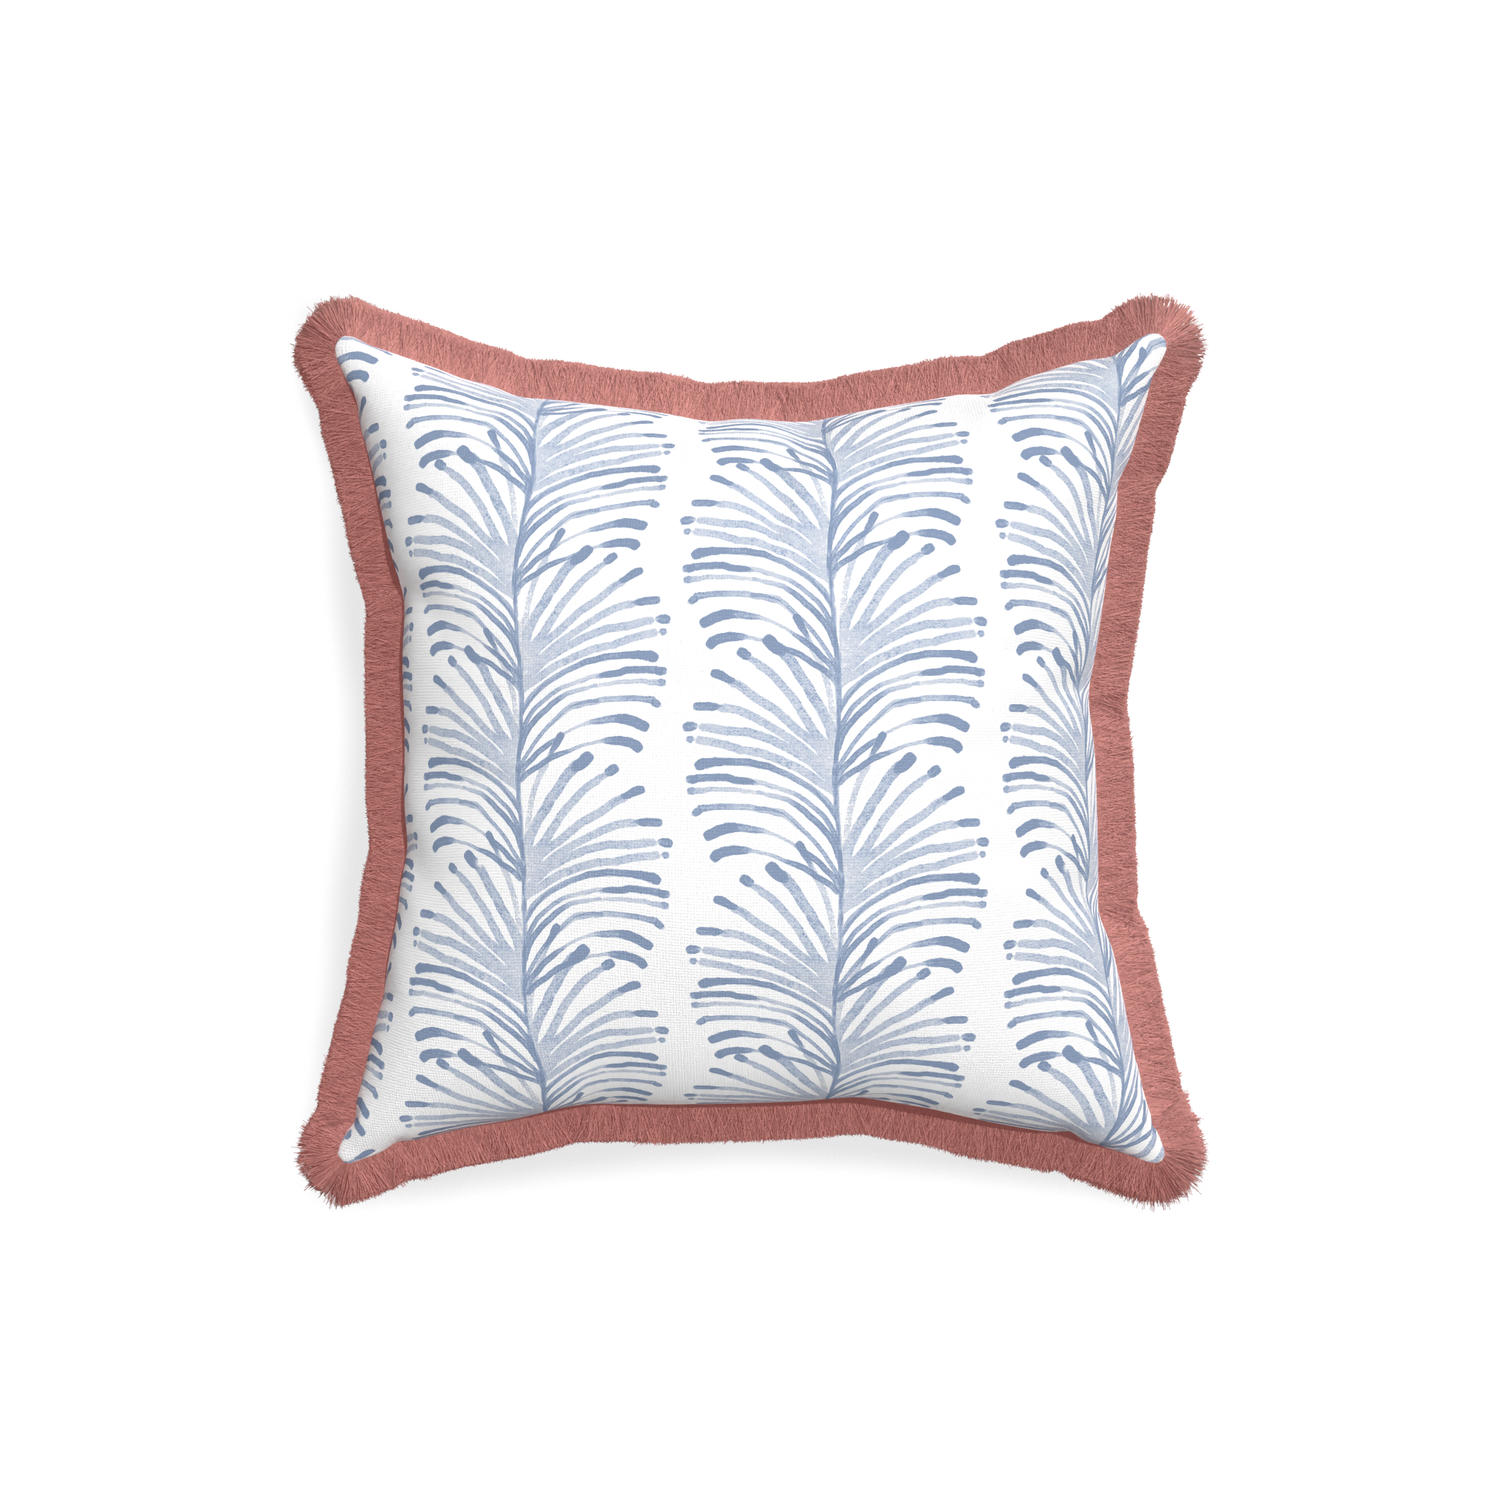 18-square emma sky custom pillow with d fringe on white background